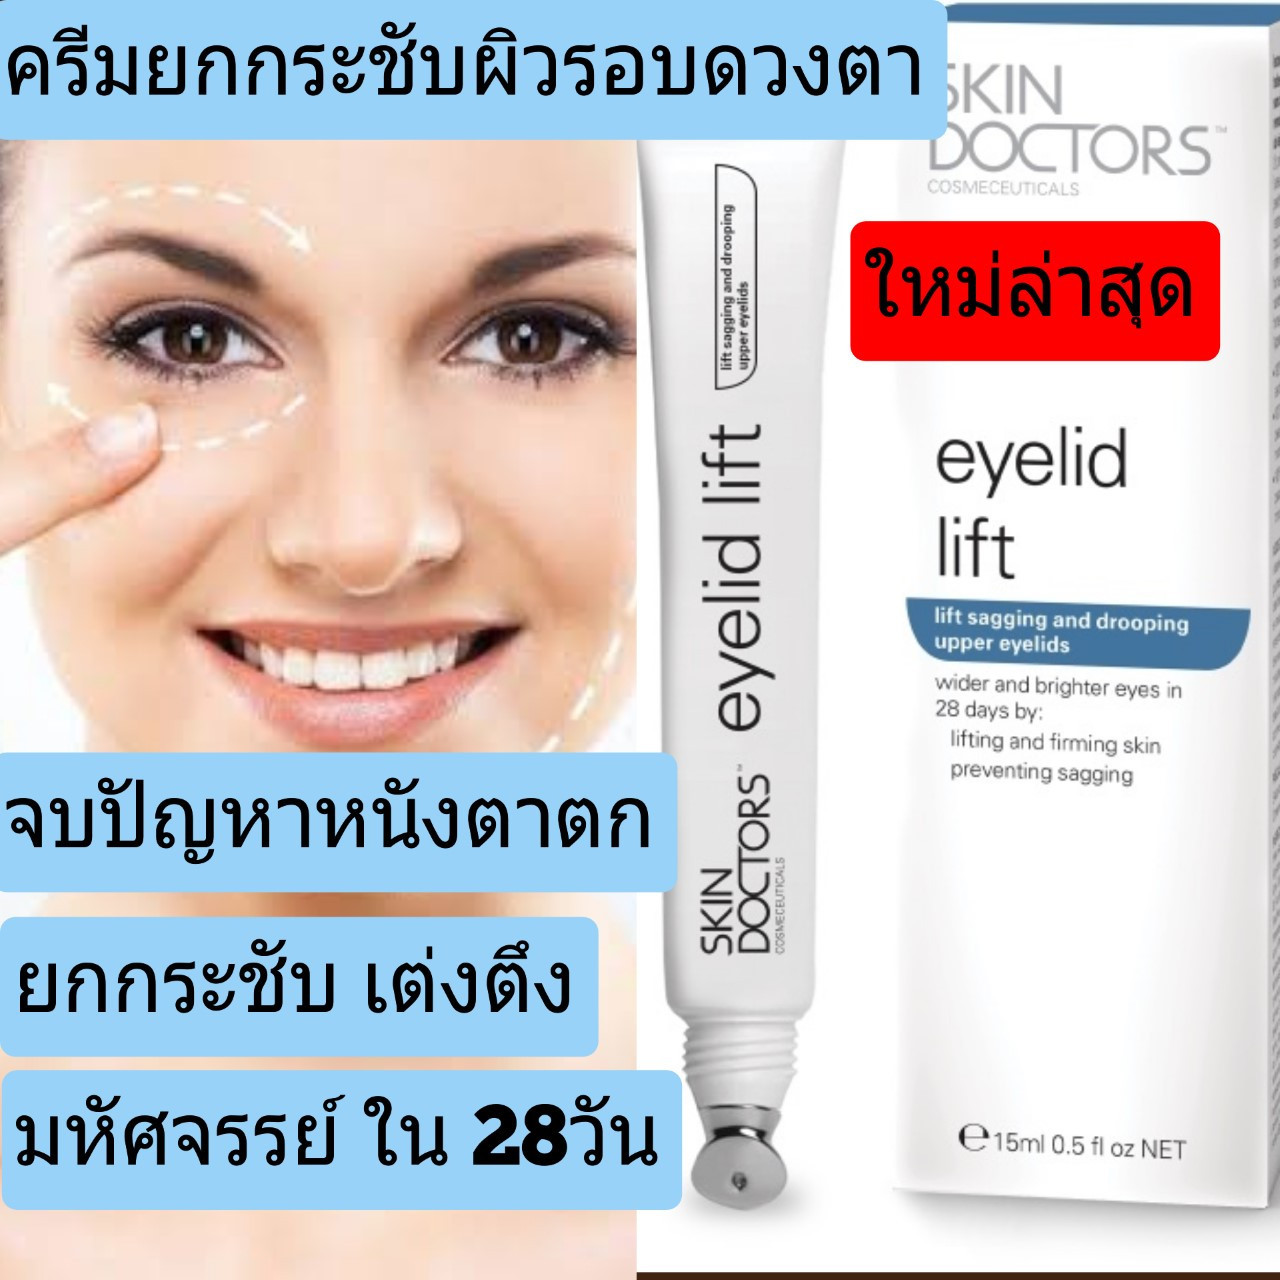 skin doctors eyelid lift1